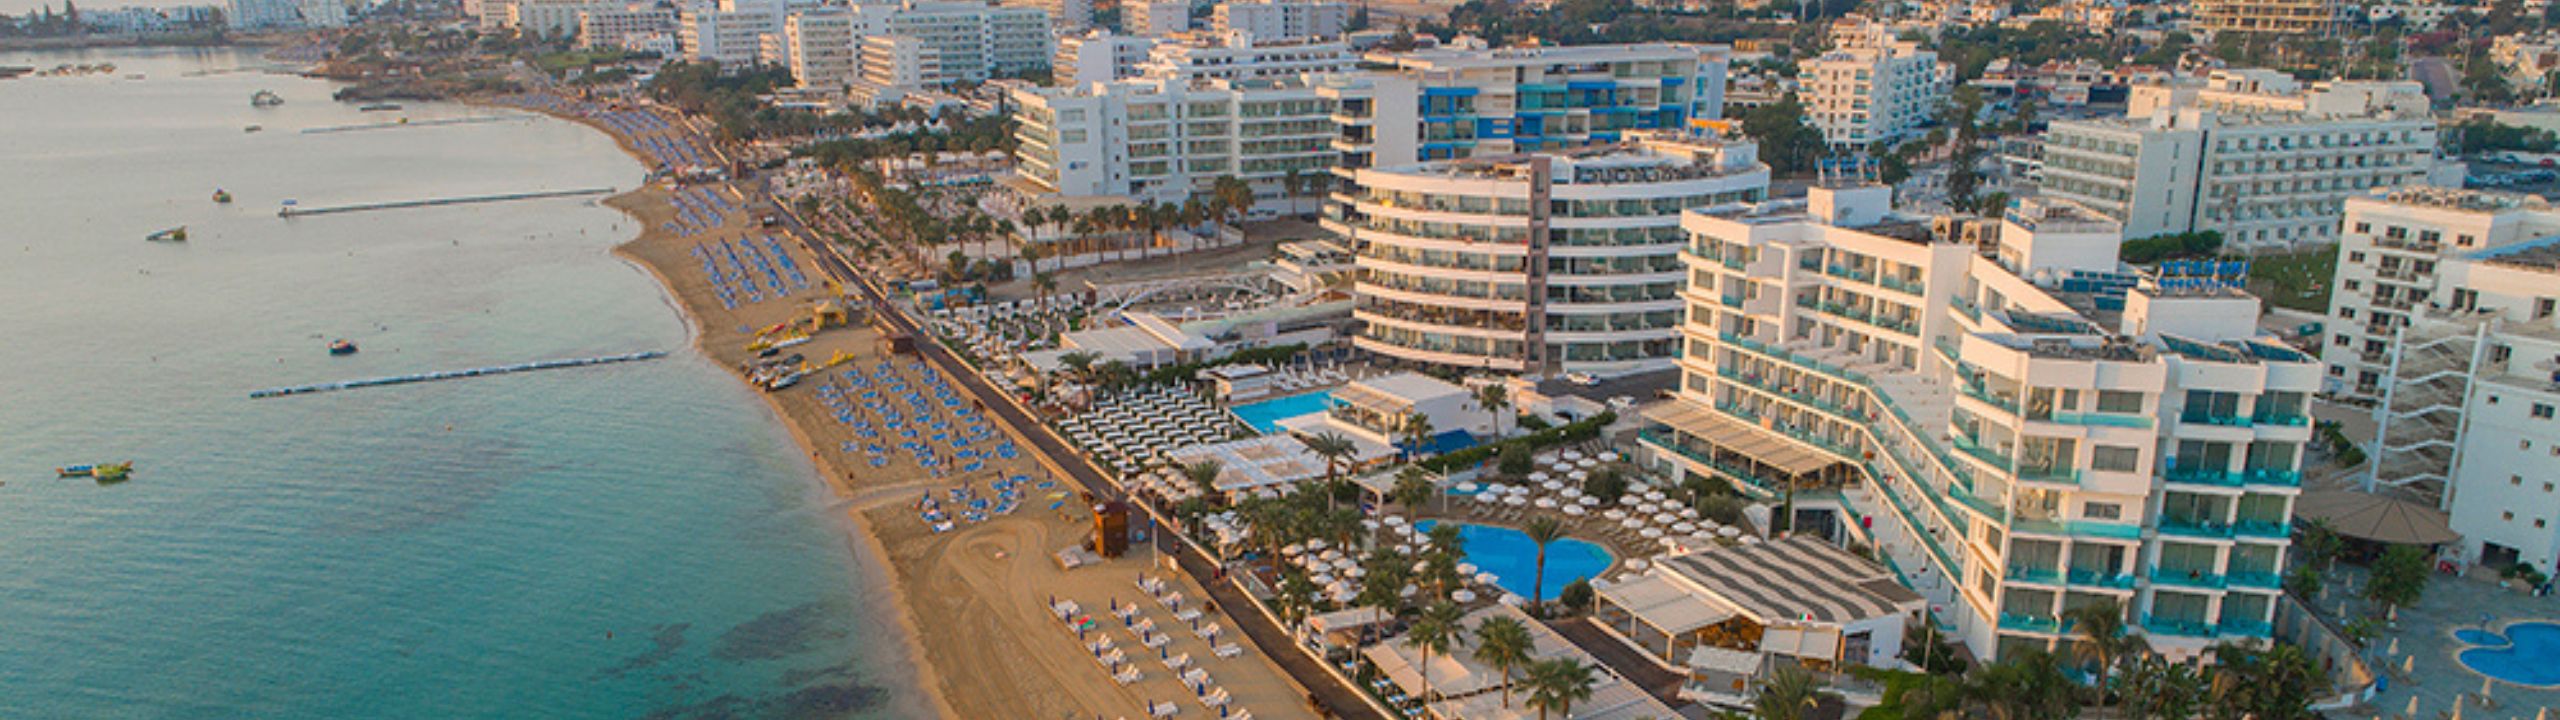 Vrissaki Beach Hotel in Protaras Cyprus